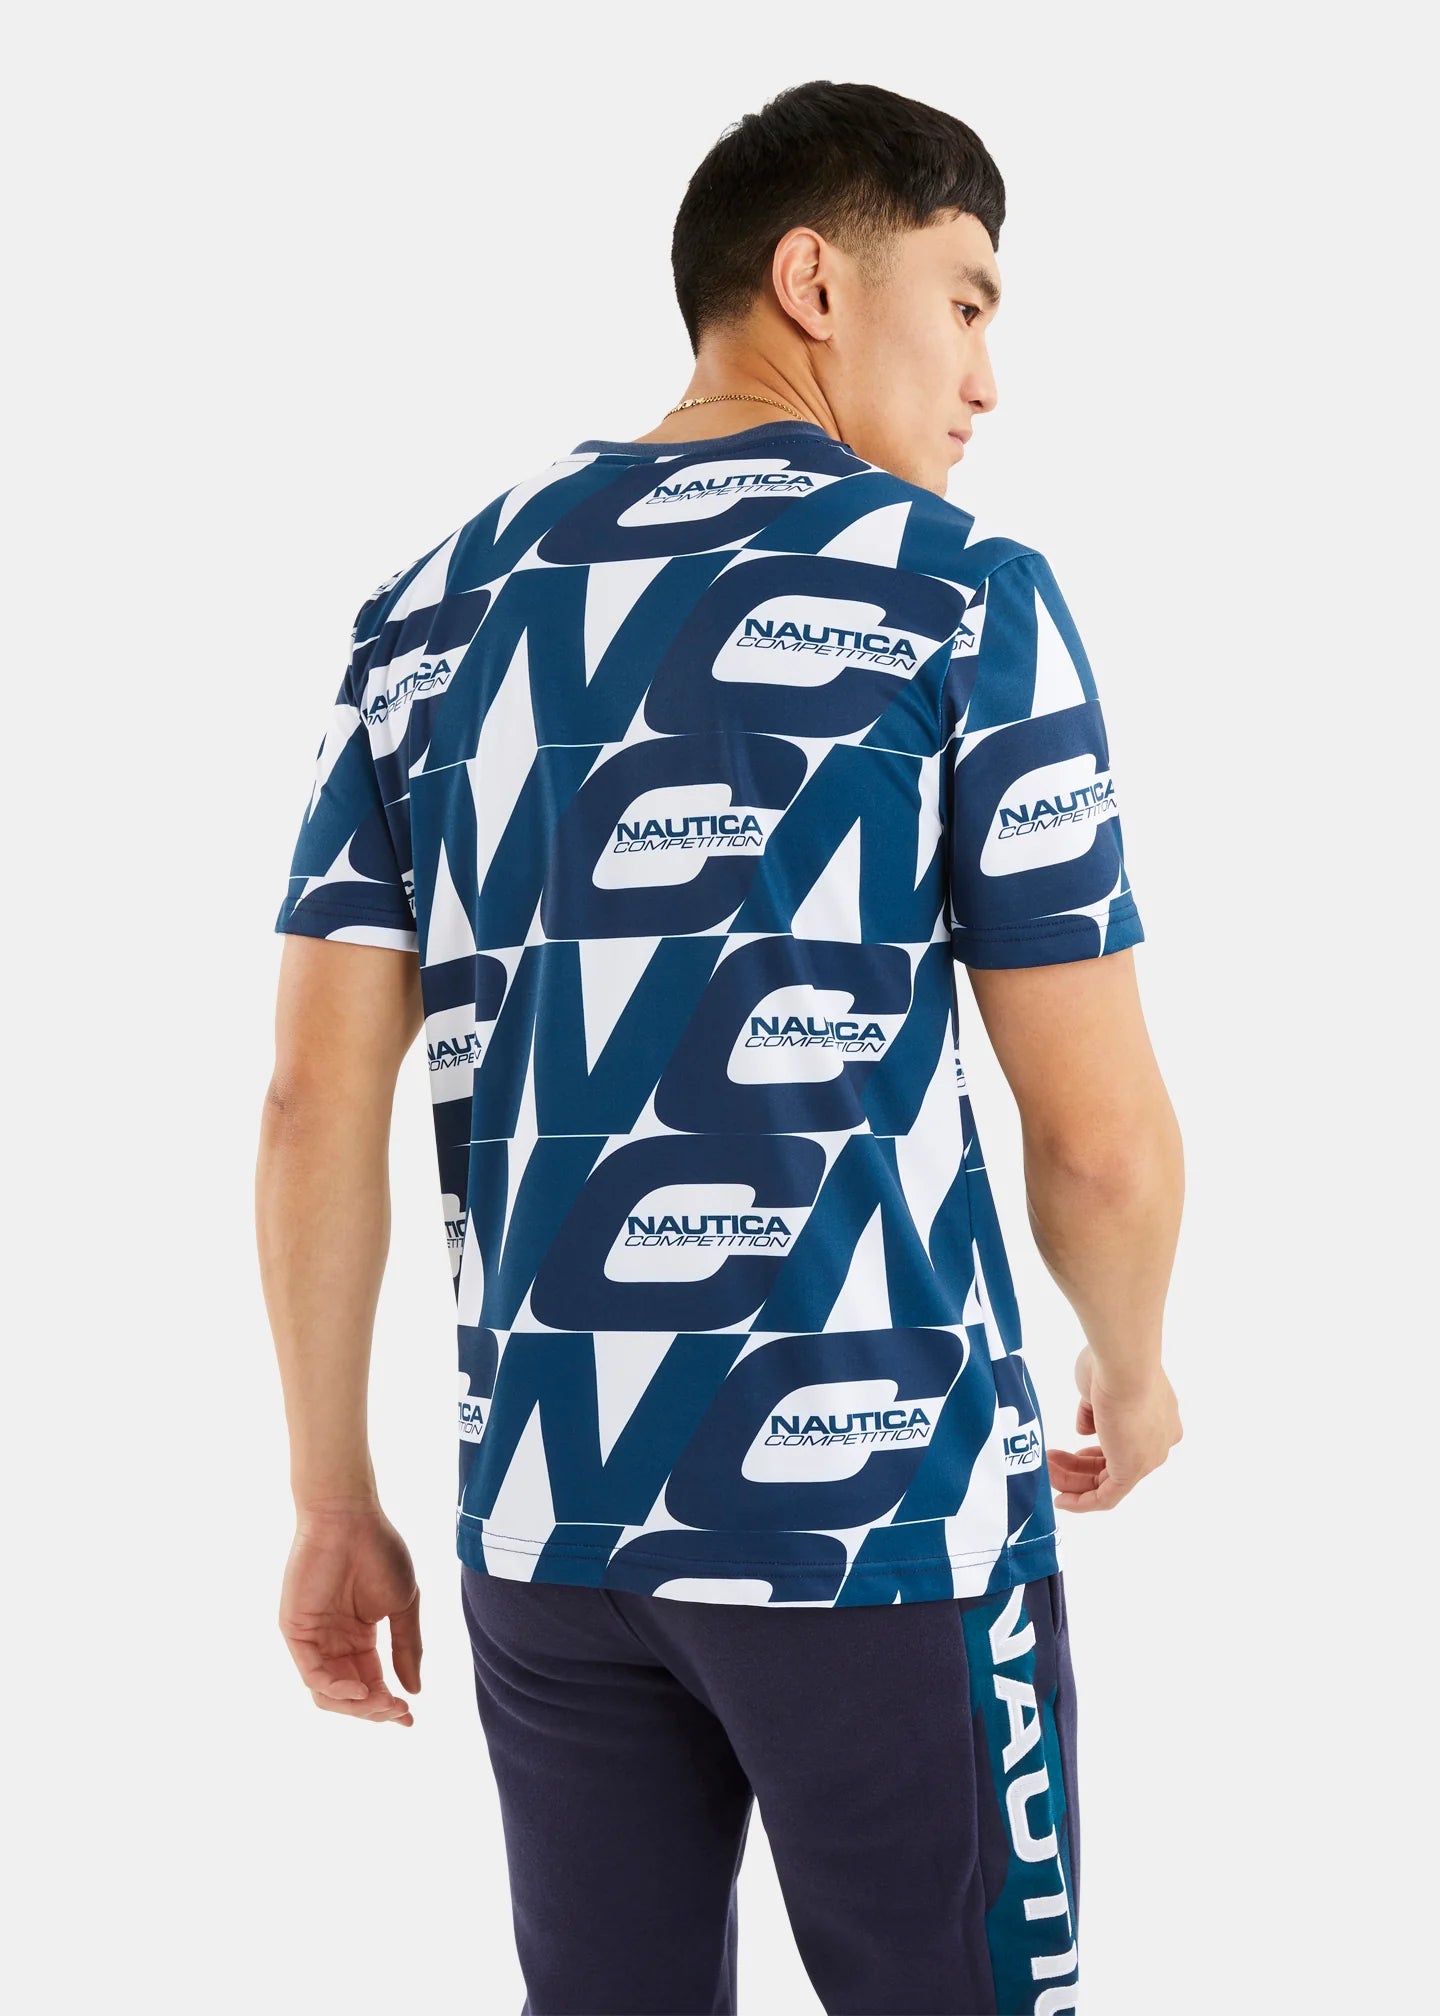 Nautica Paxos T-Shirt